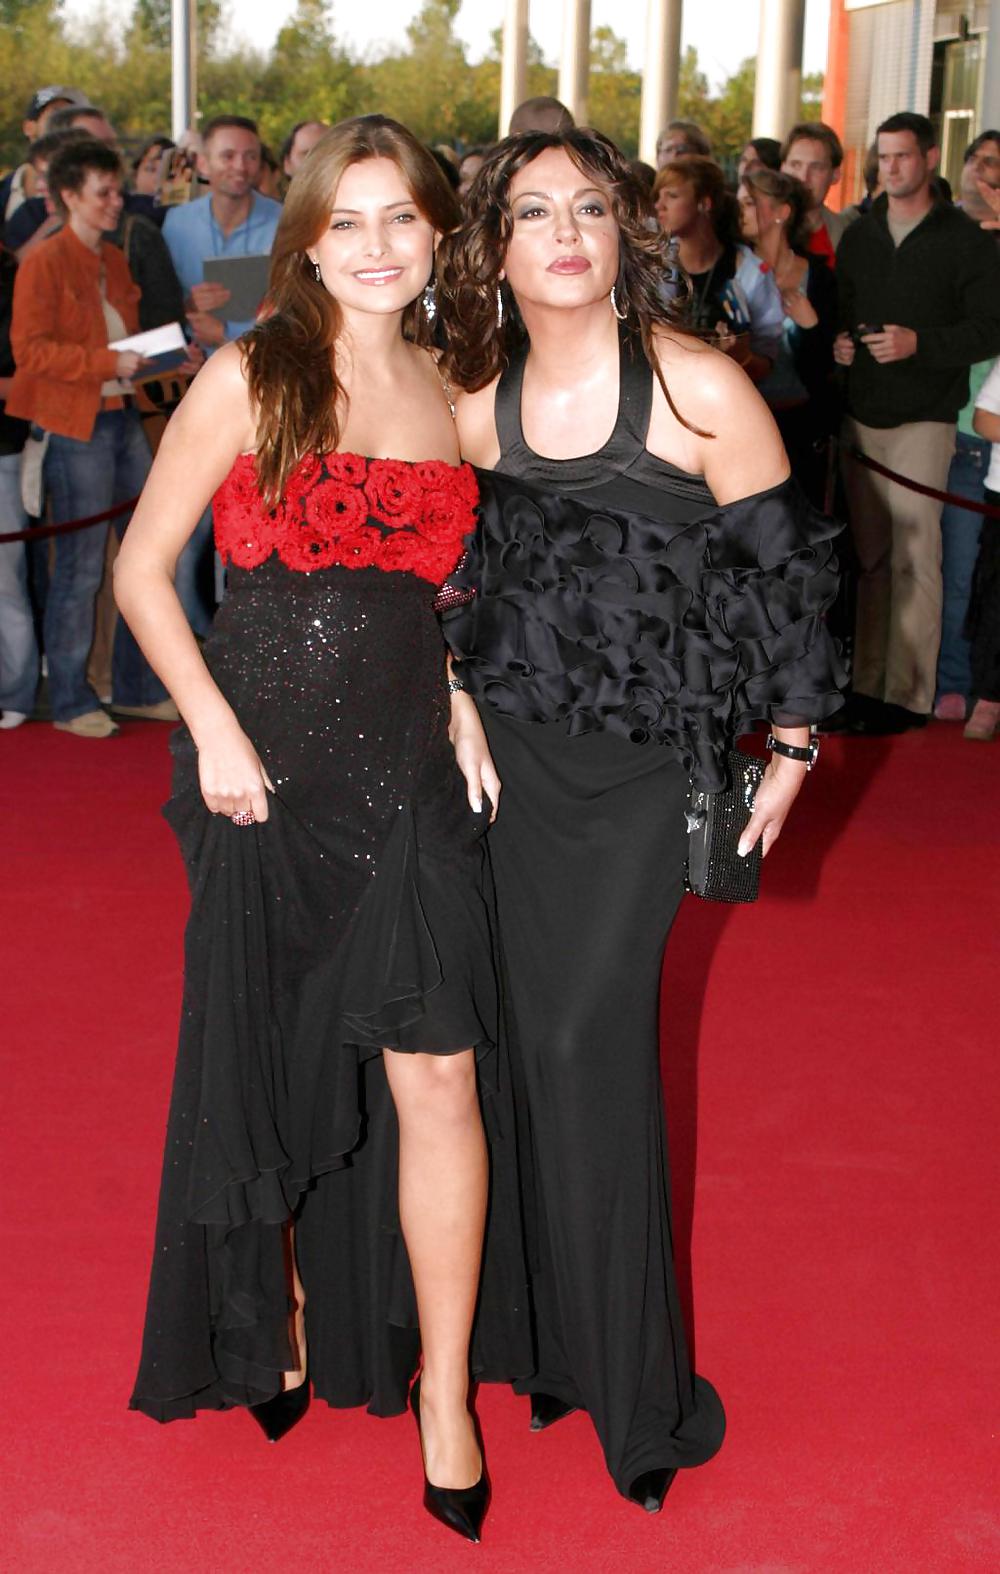 Mom & Daughter: Simone & Sophia Thomalla (German Celebs) #6081485